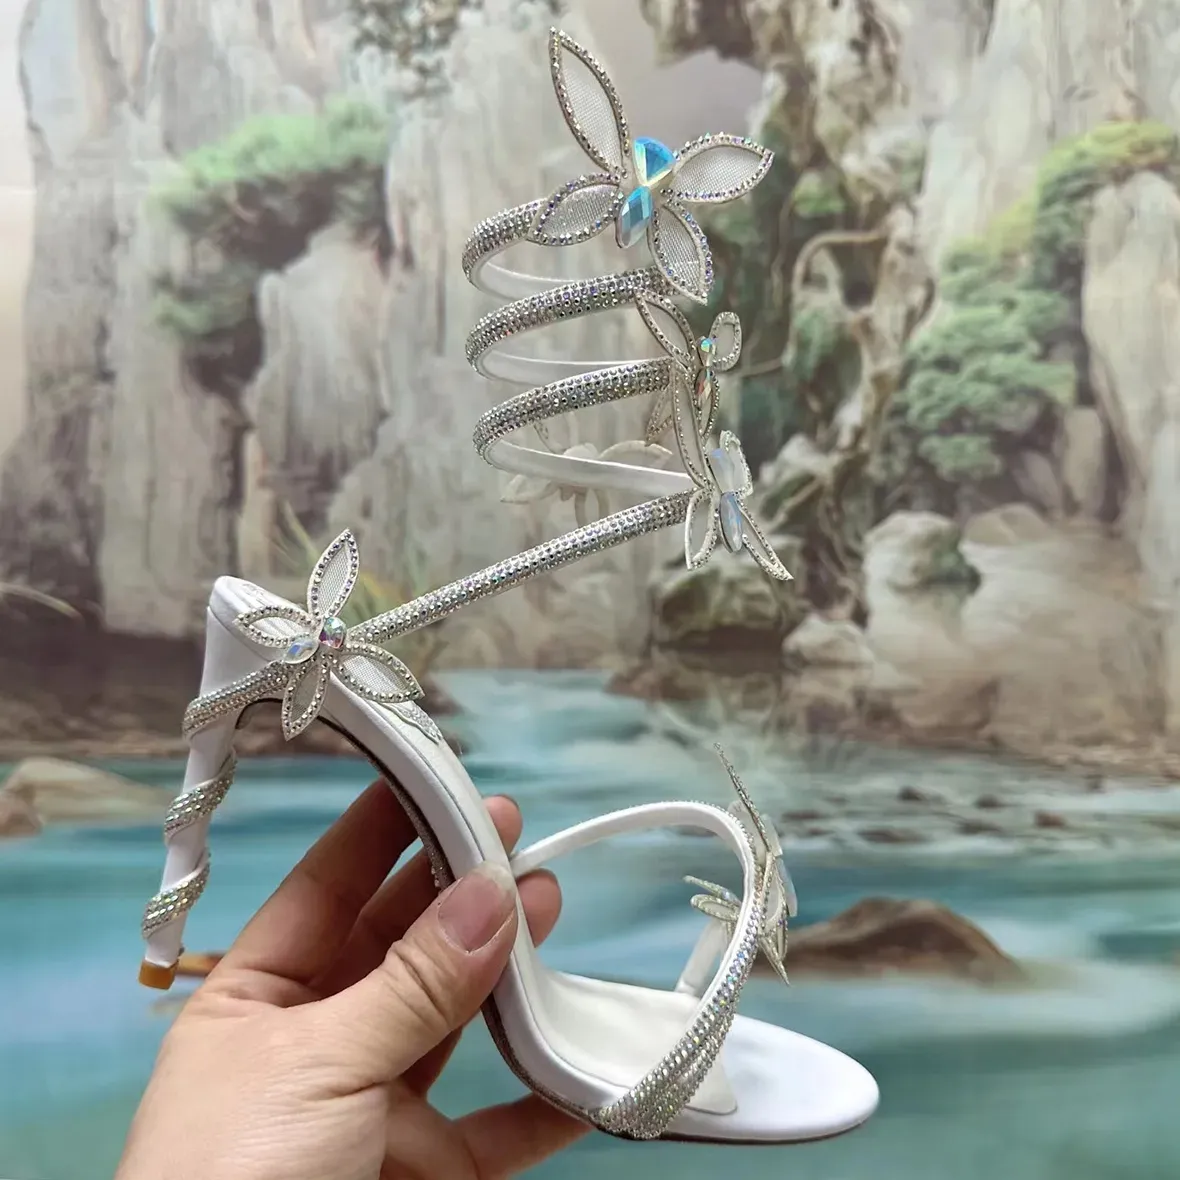 Rene Caovilla High Heel Sandals Designer Women Dress Shoes 9.5 Cm Serpentine Wraparound Crystal Foot Ring Fashion Party Shiletto Shipleto New New